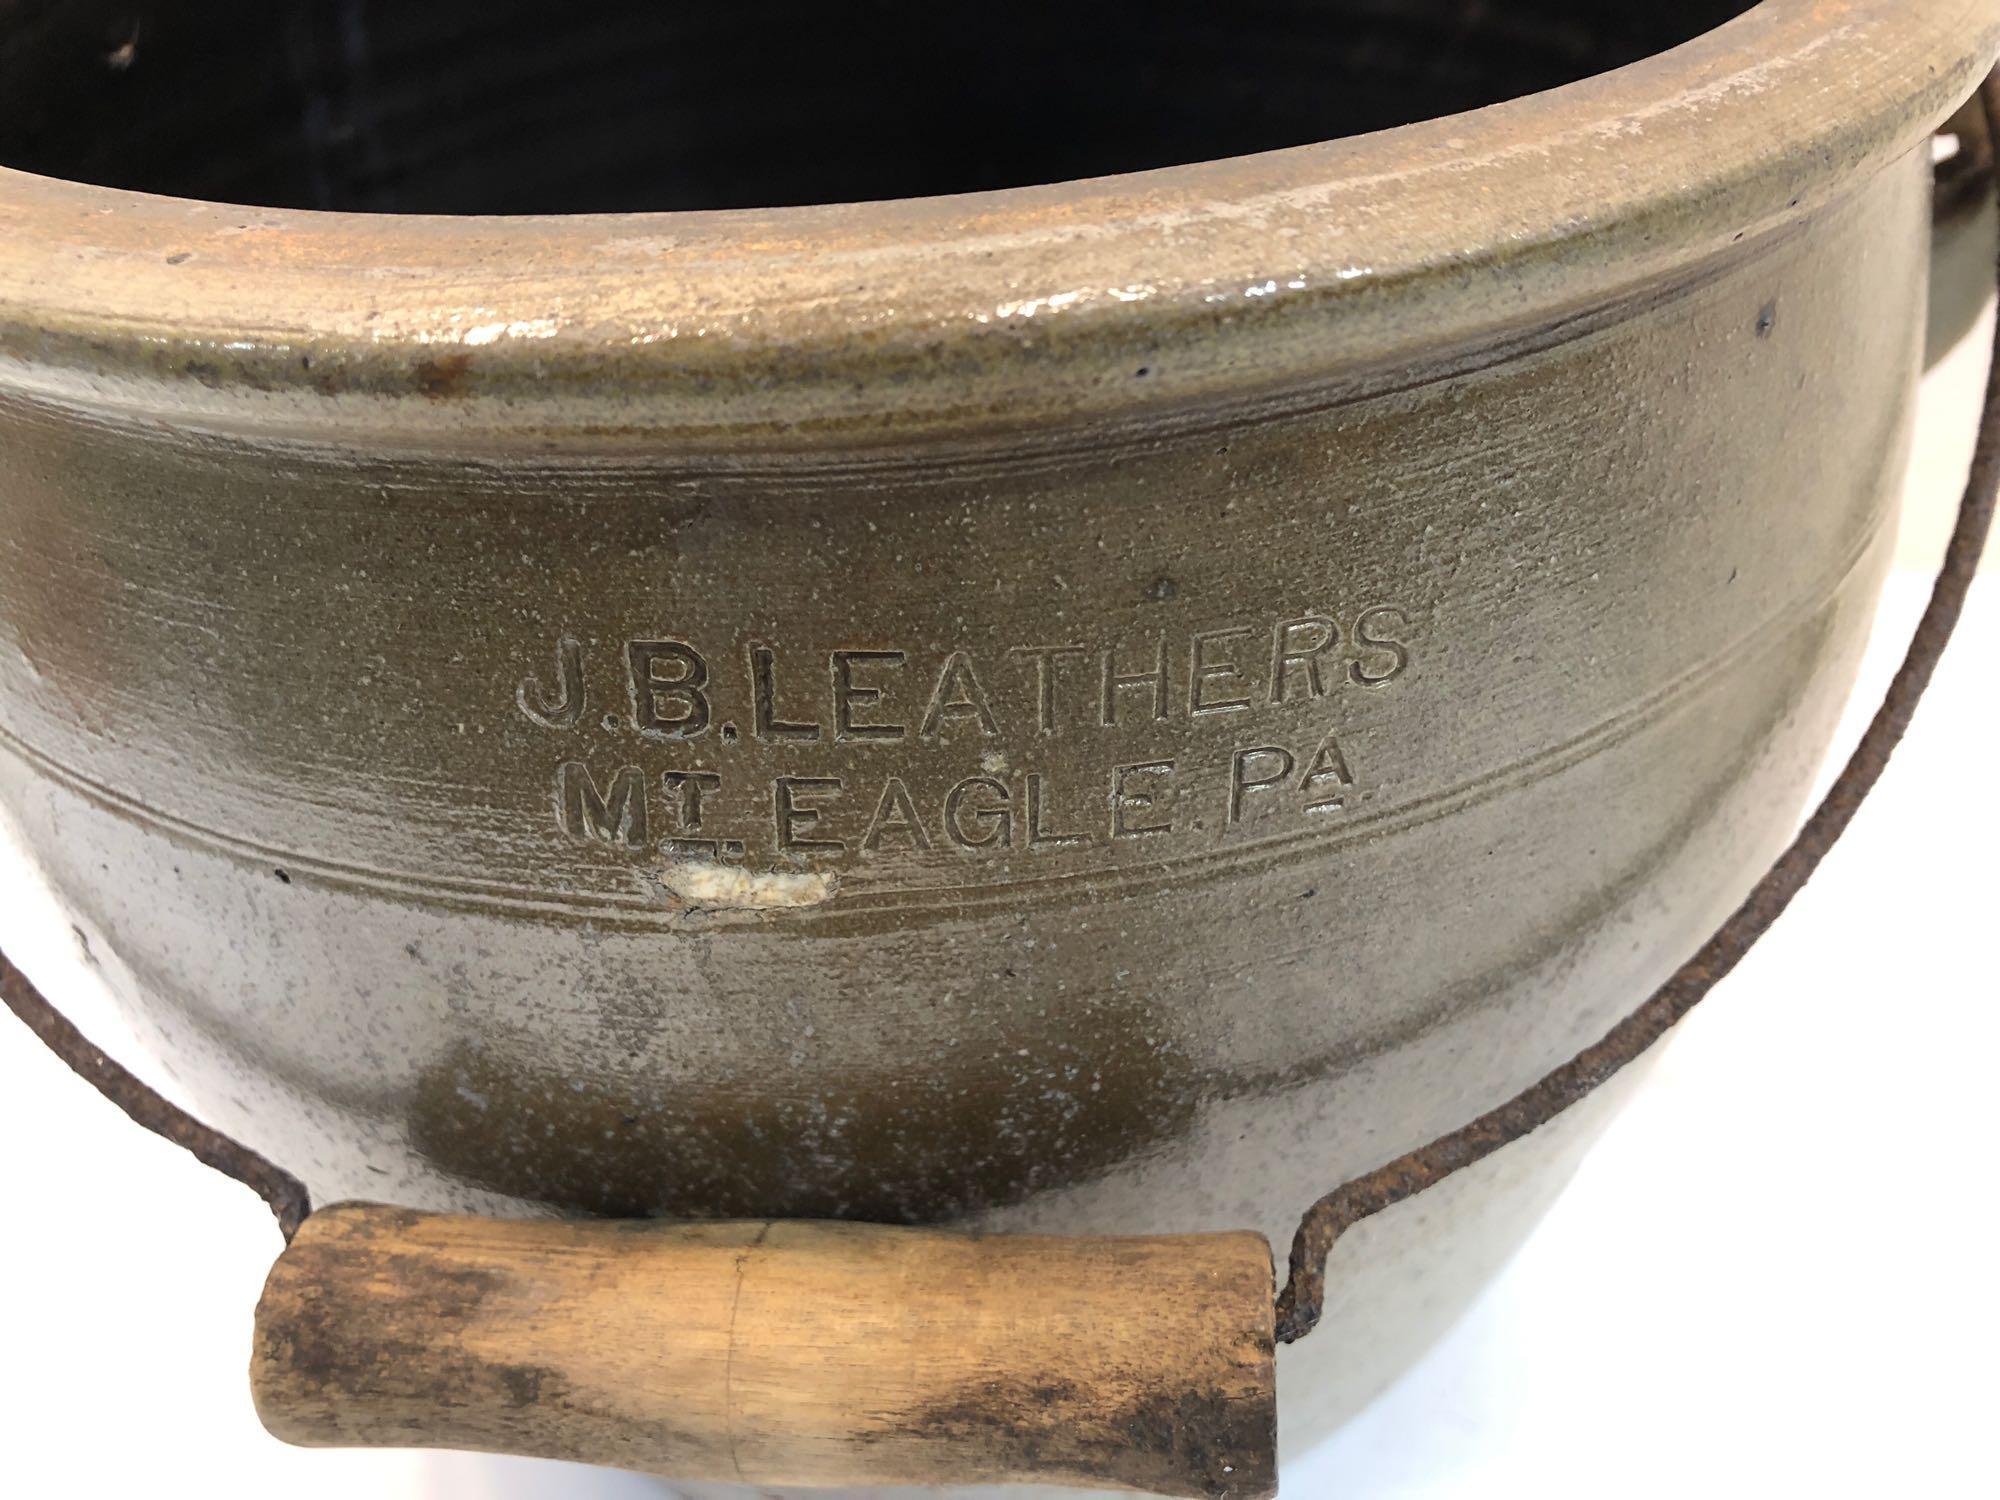 J. B. LEATHERS MT EAGLE PA 2 Gallon stoneware crock with bail handle.